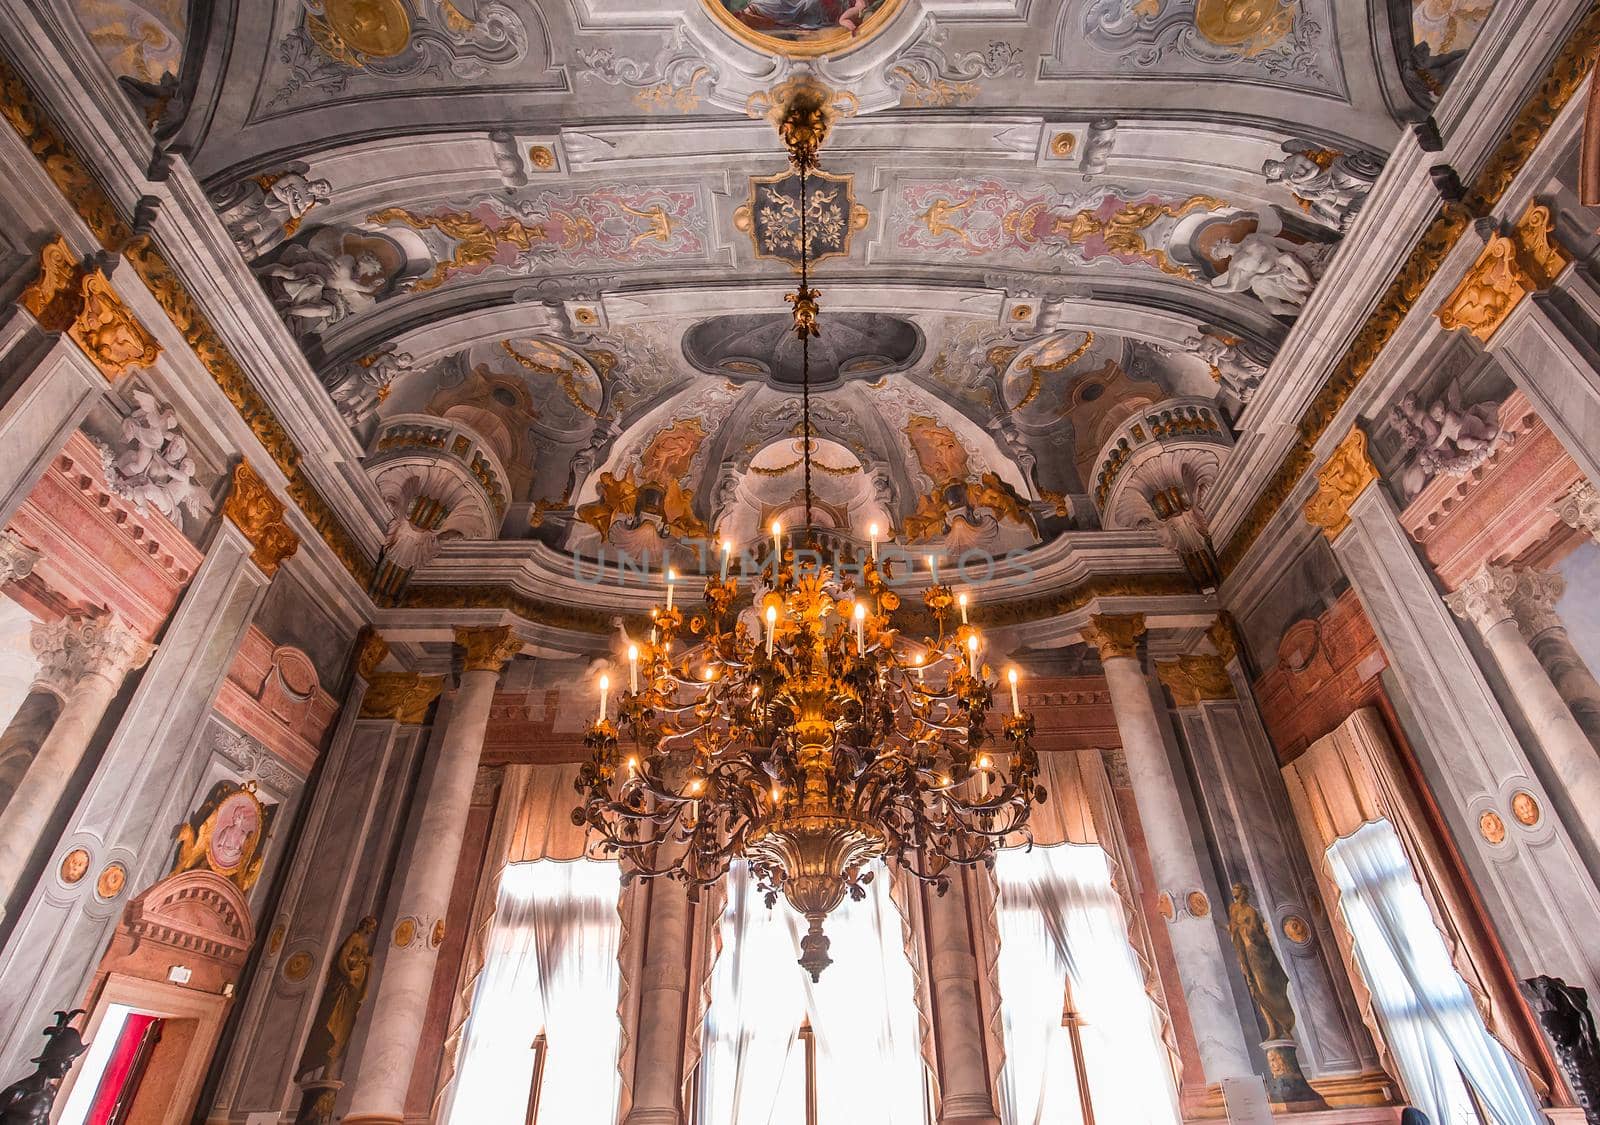 interiors of the Ca' Rezzonico palace, Venice, Italy by photogolfer